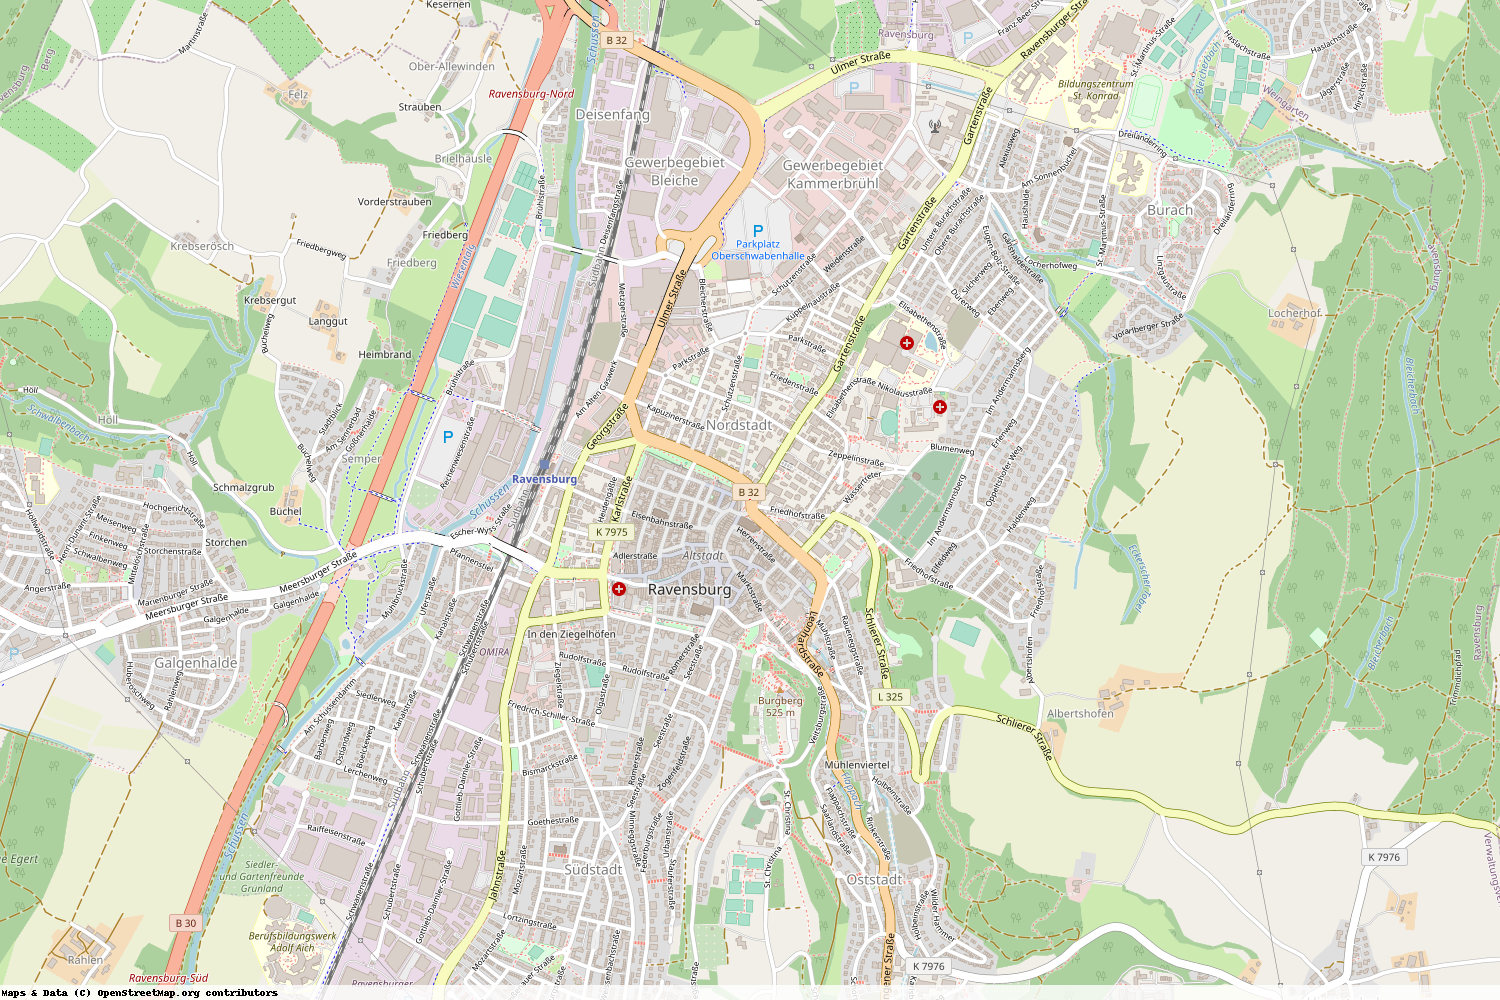 Ist gerade Stromausfall in Baden-Württemberg - Ravensburg - Ravensburg?